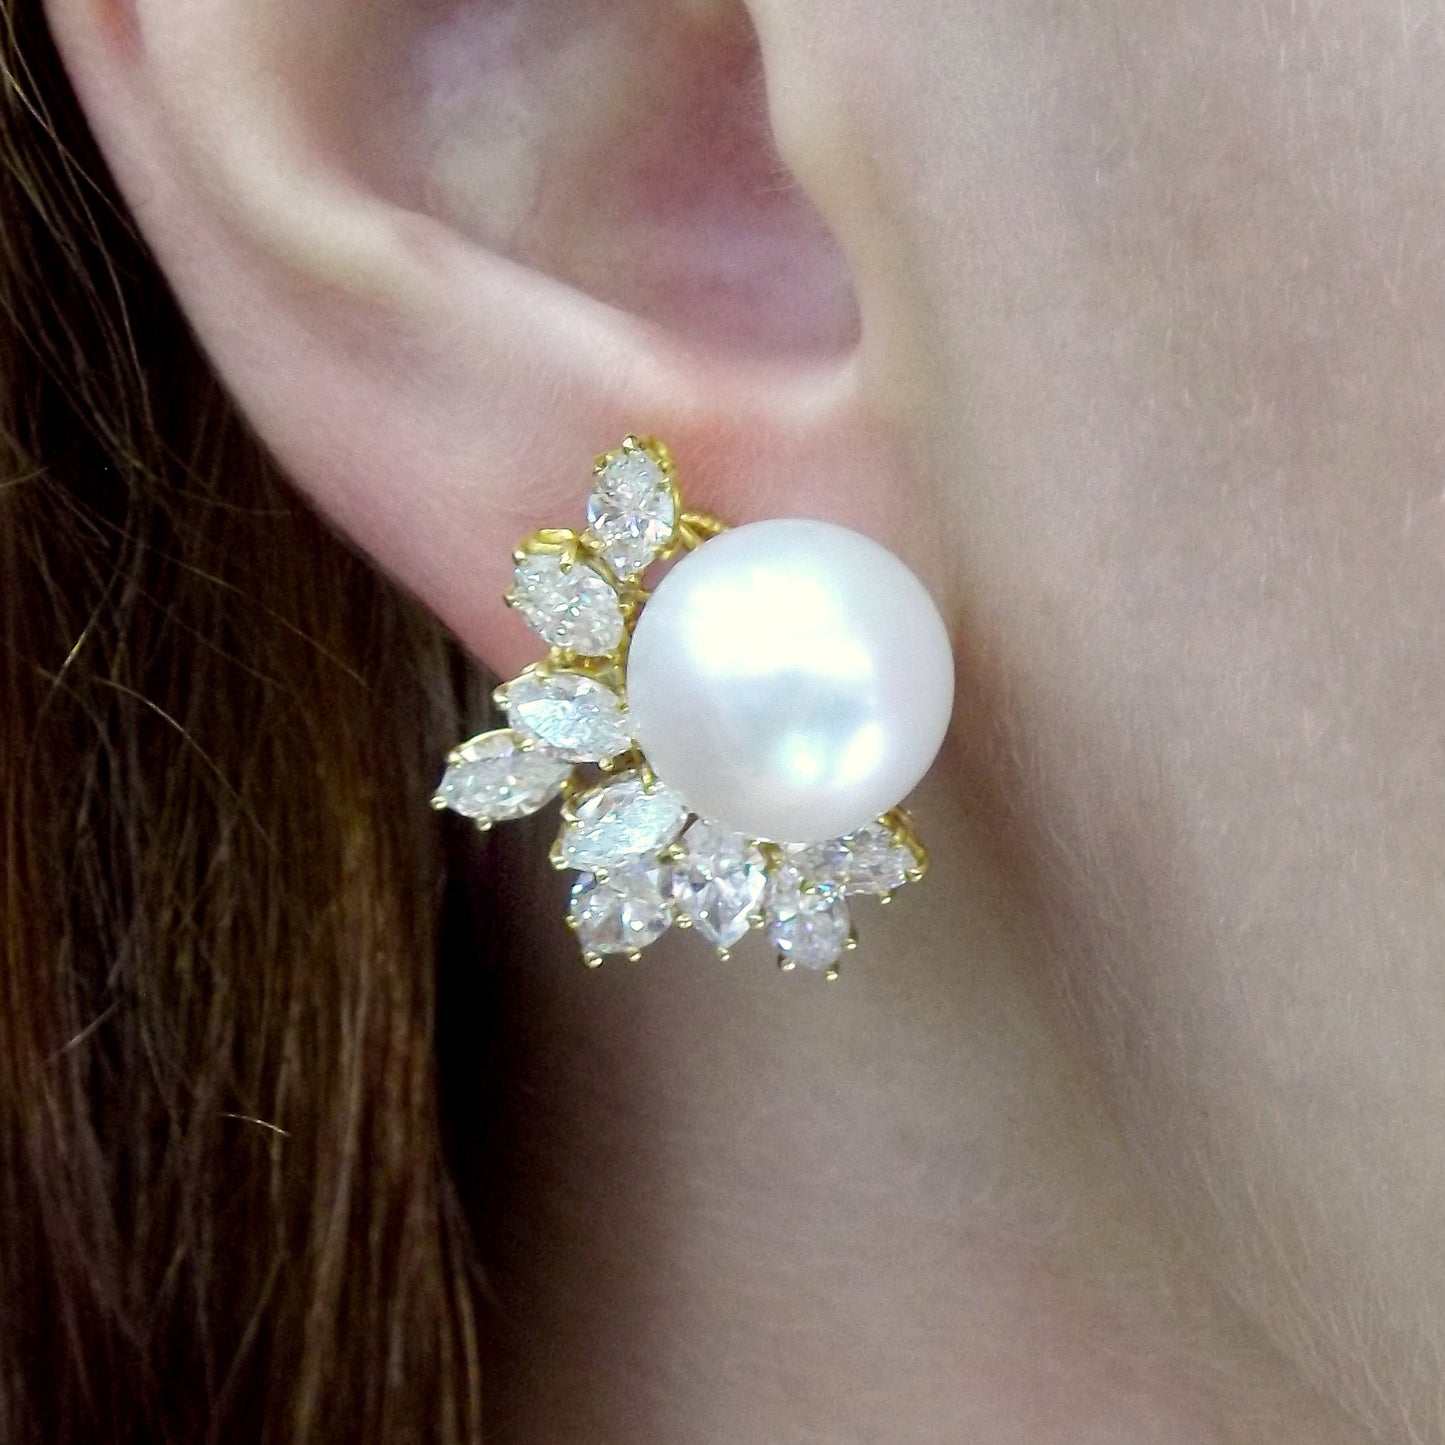 Cultured Pearl Diamond Earclips by Harry Winston